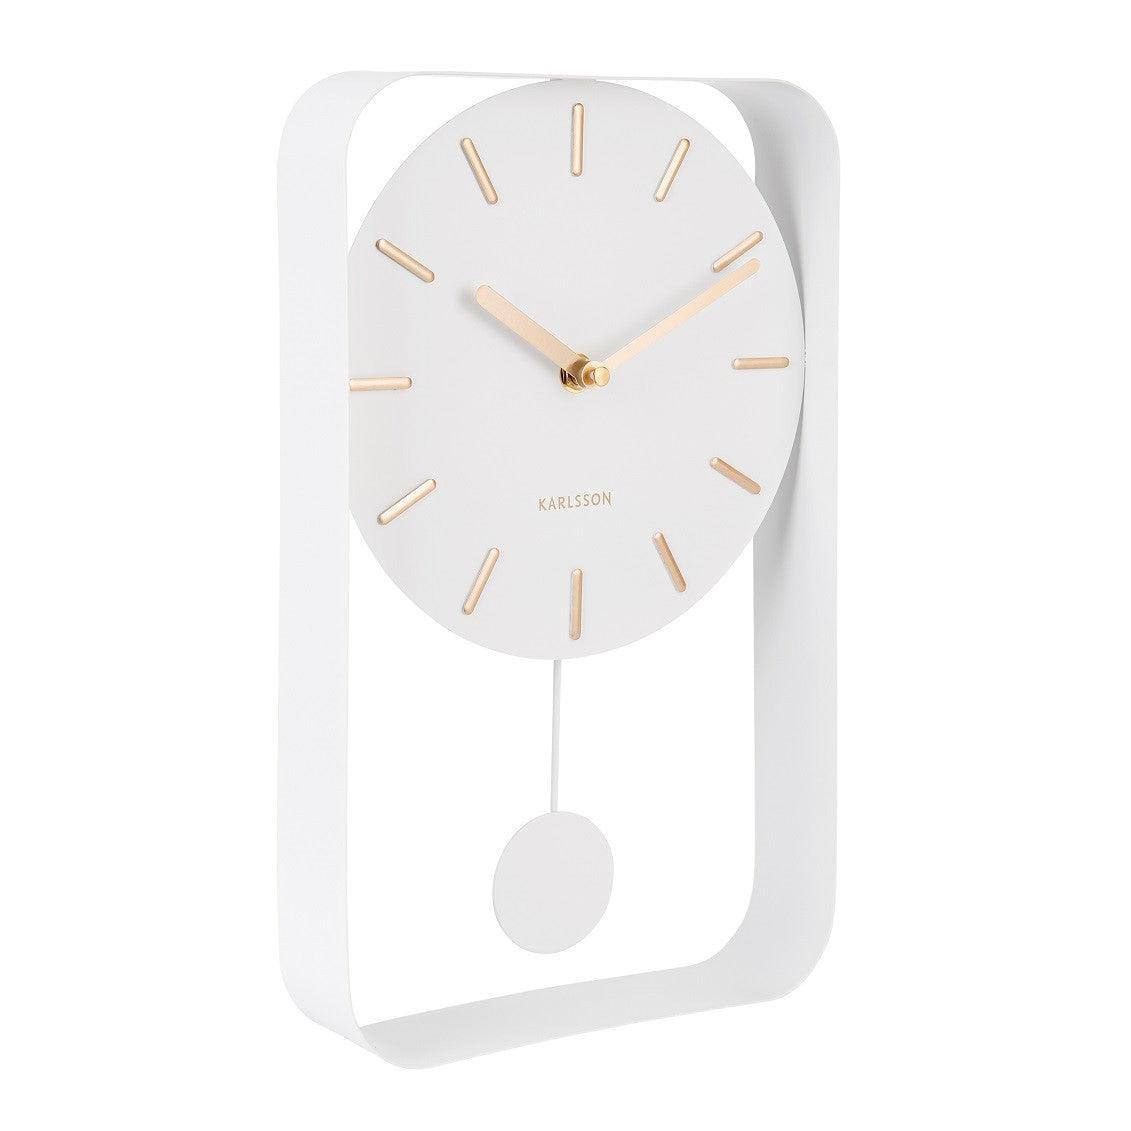 Kaiser 400 day reserve pendulum clock : r/Horology